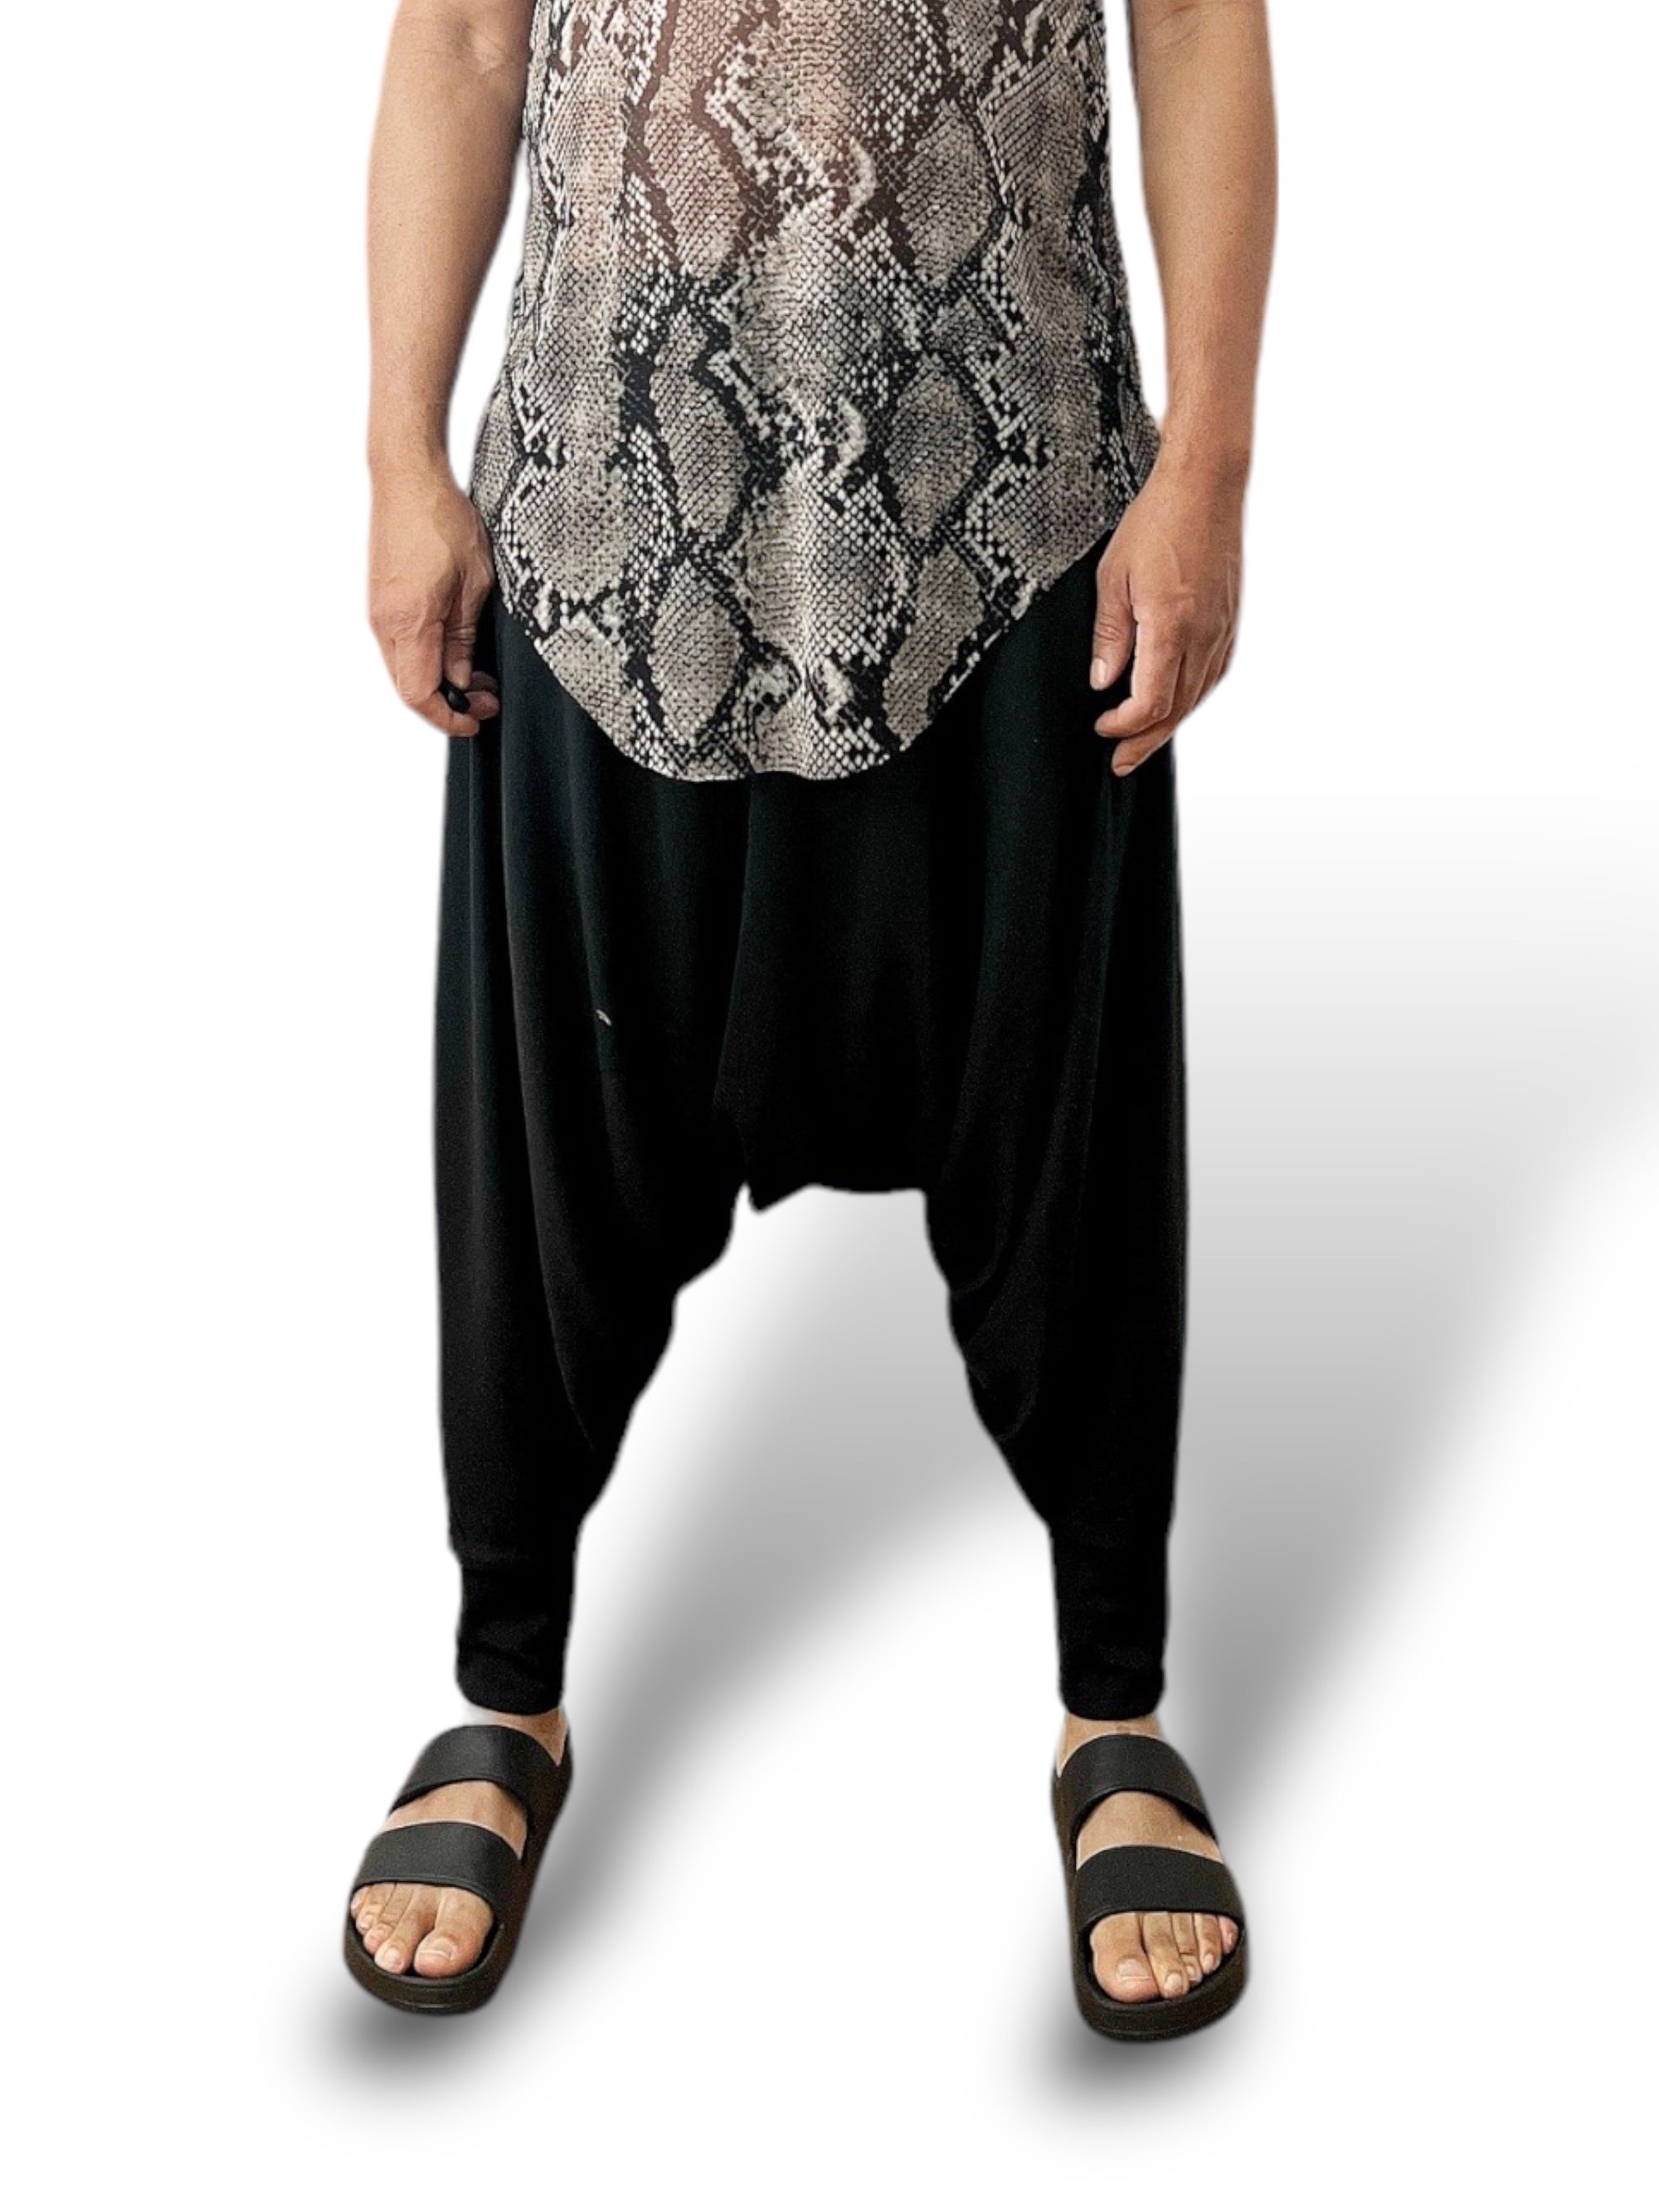 Tie Dye Jersey Harem Pants Hippy Boho Yoga Festival | eBay